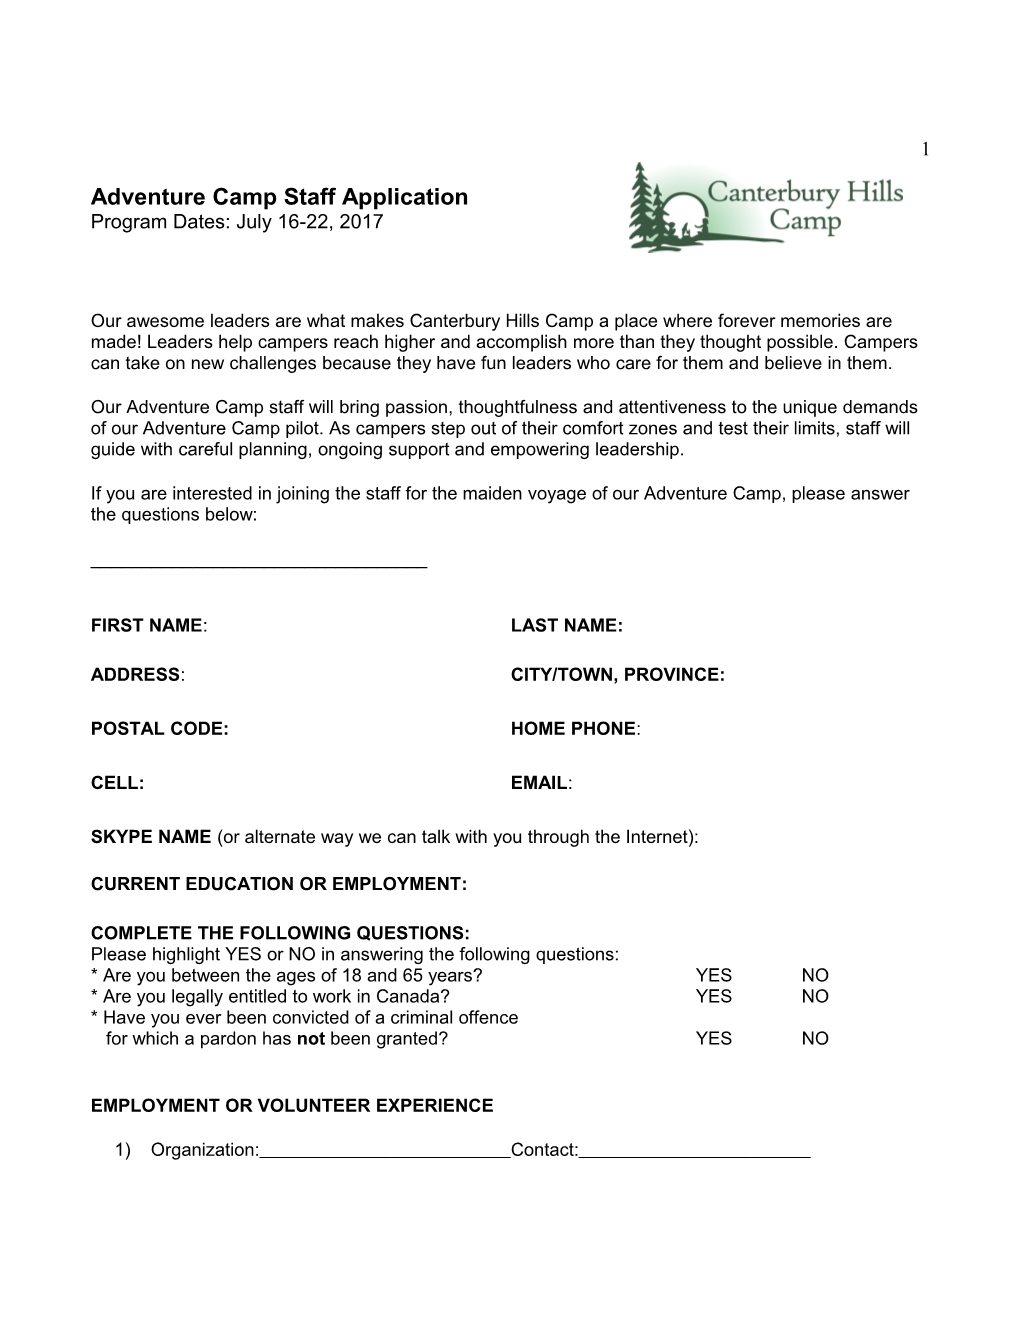 Adventure Camp Staff Application